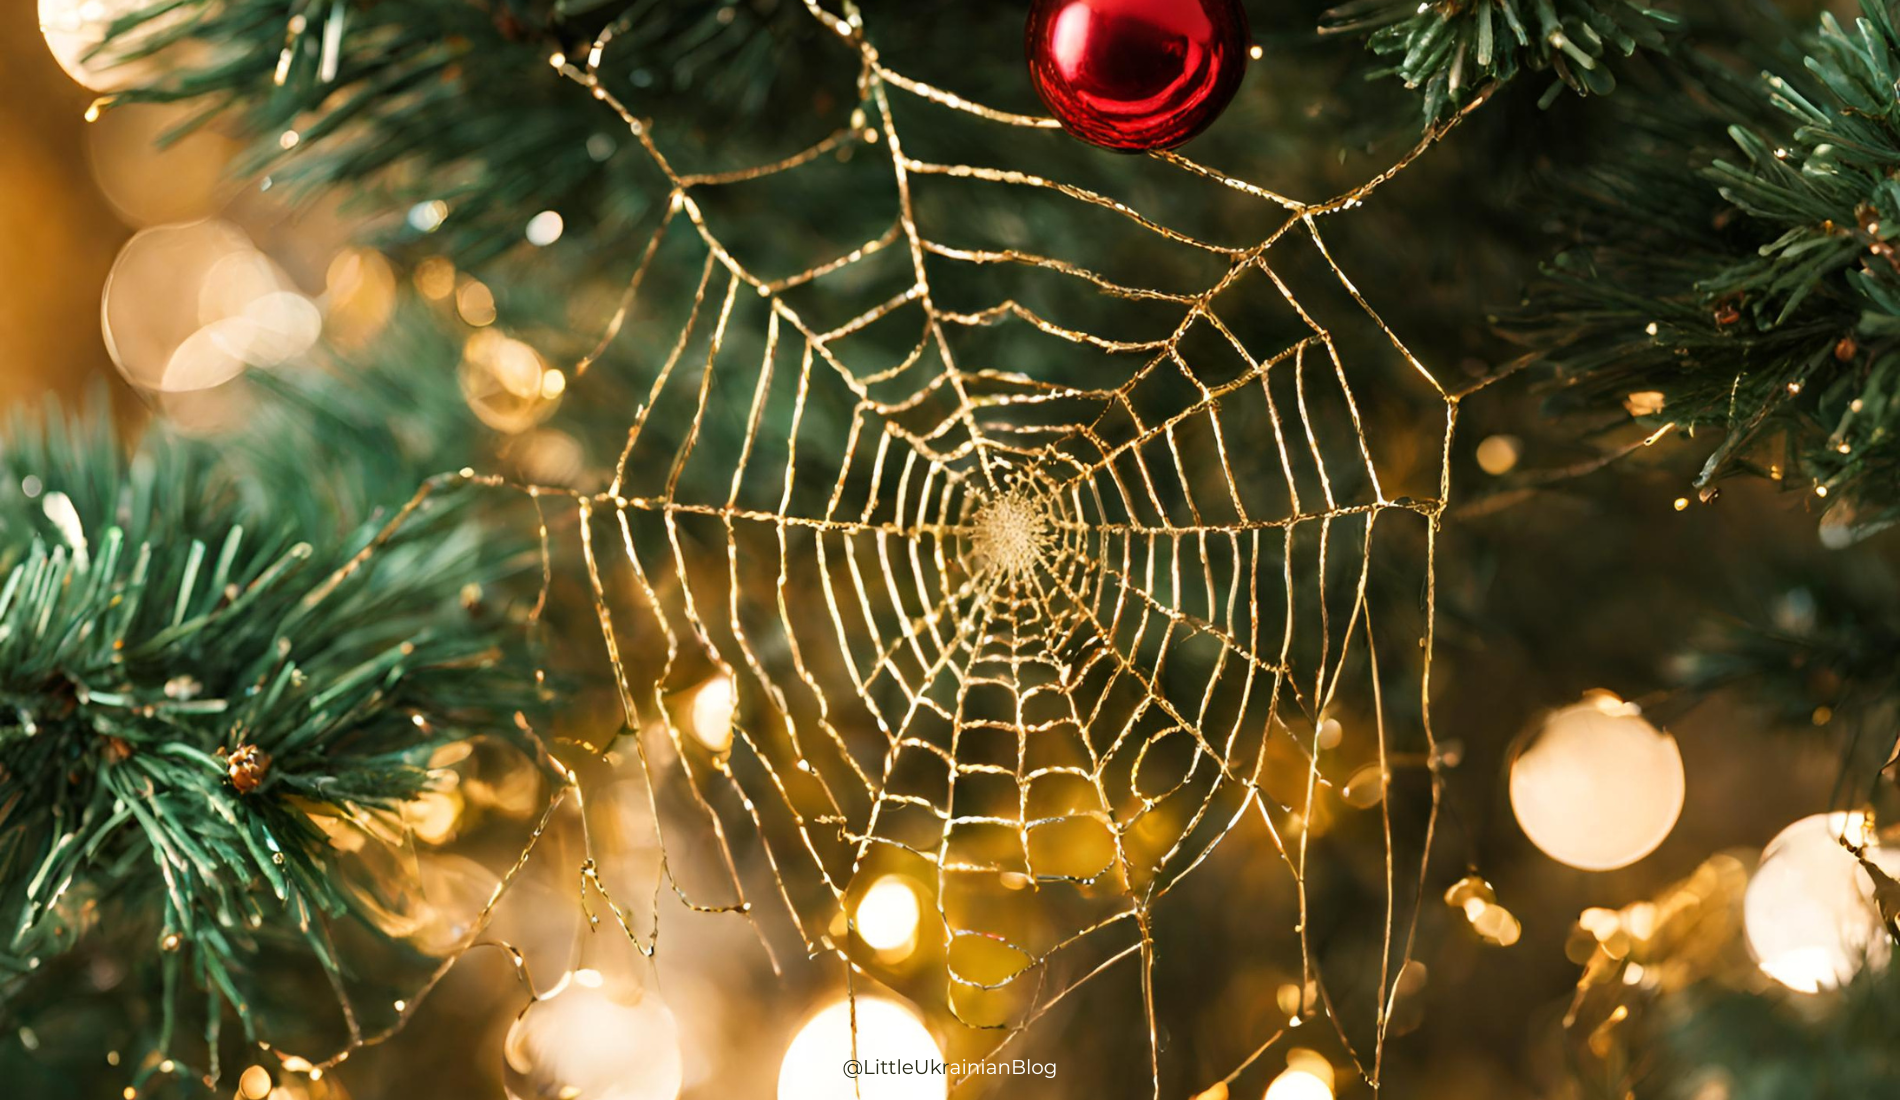 the Ukrainian legend of the Christmas spider, Легенда про різдвяного павука, legend of the christmas spider, origin of tinsel